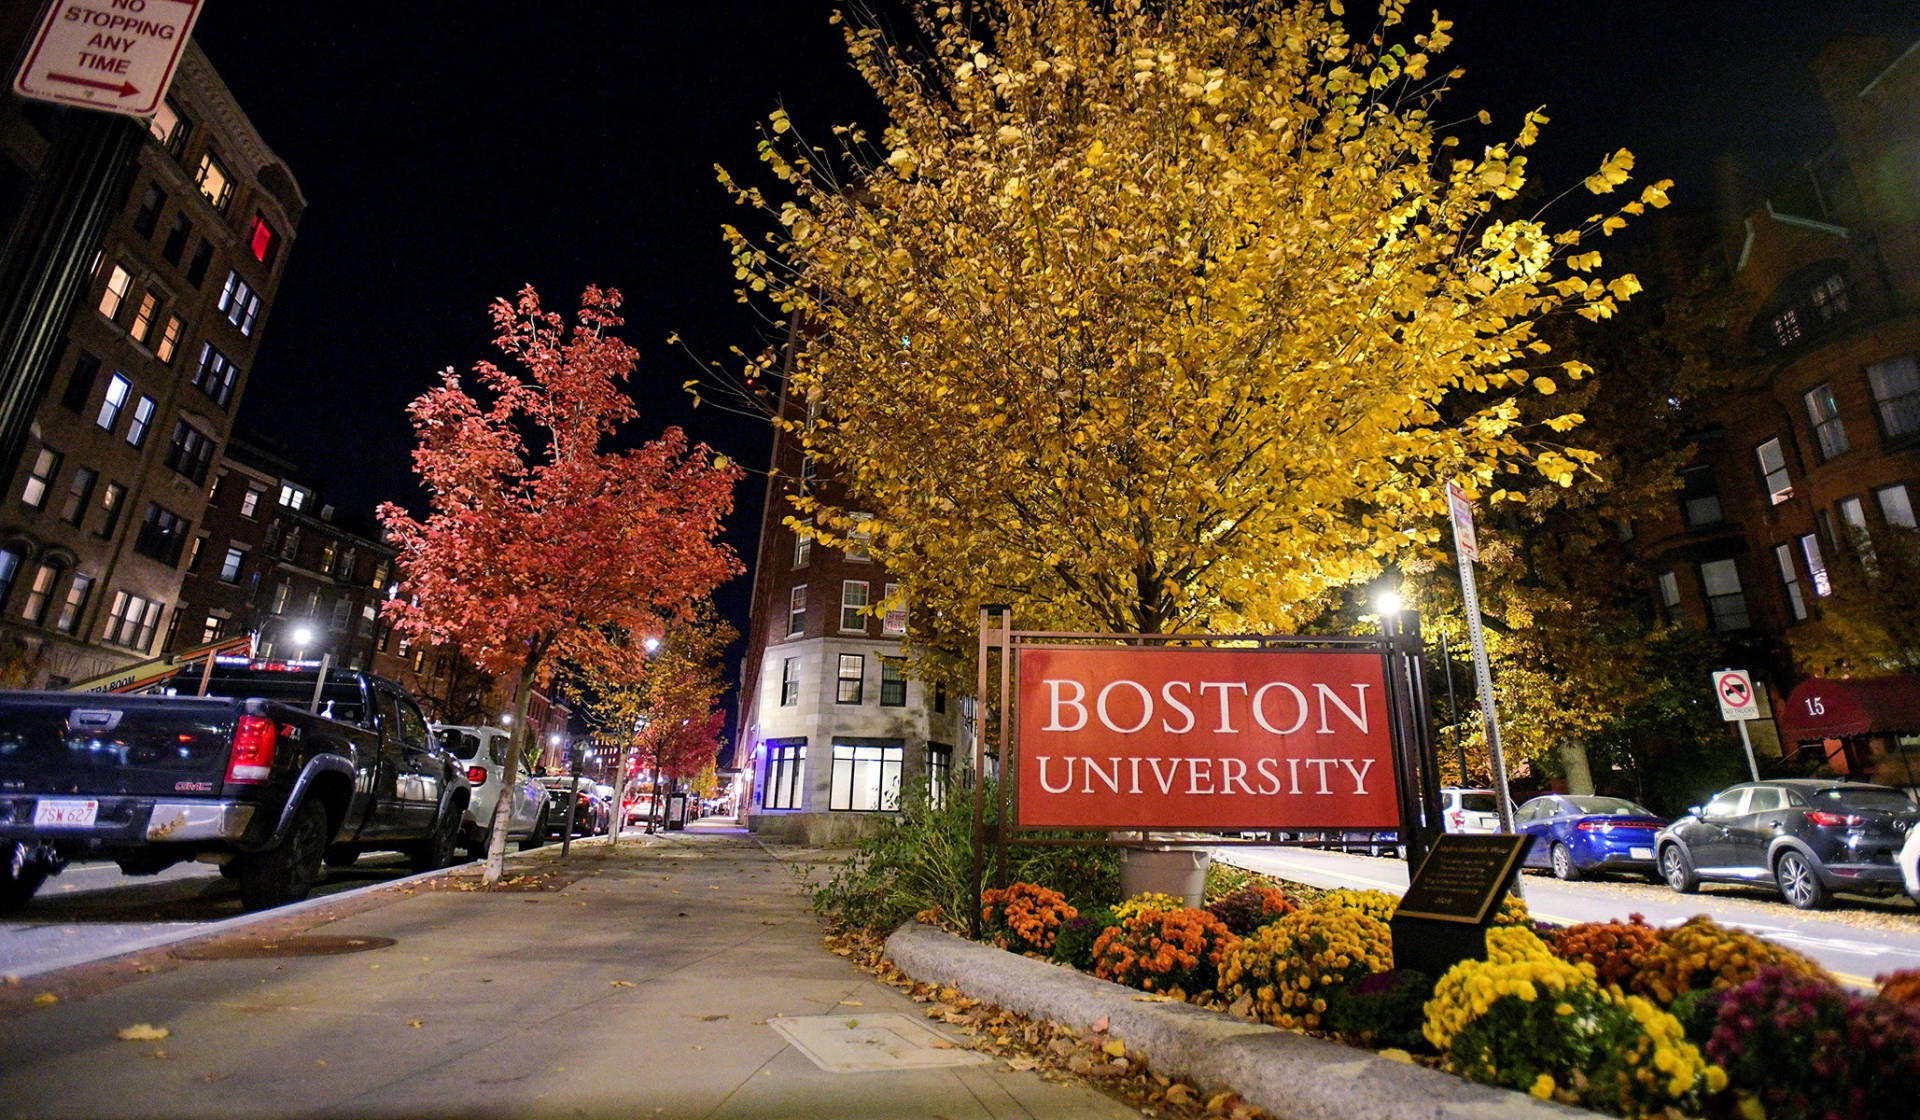 Boston University Signage At Night Wallpaper